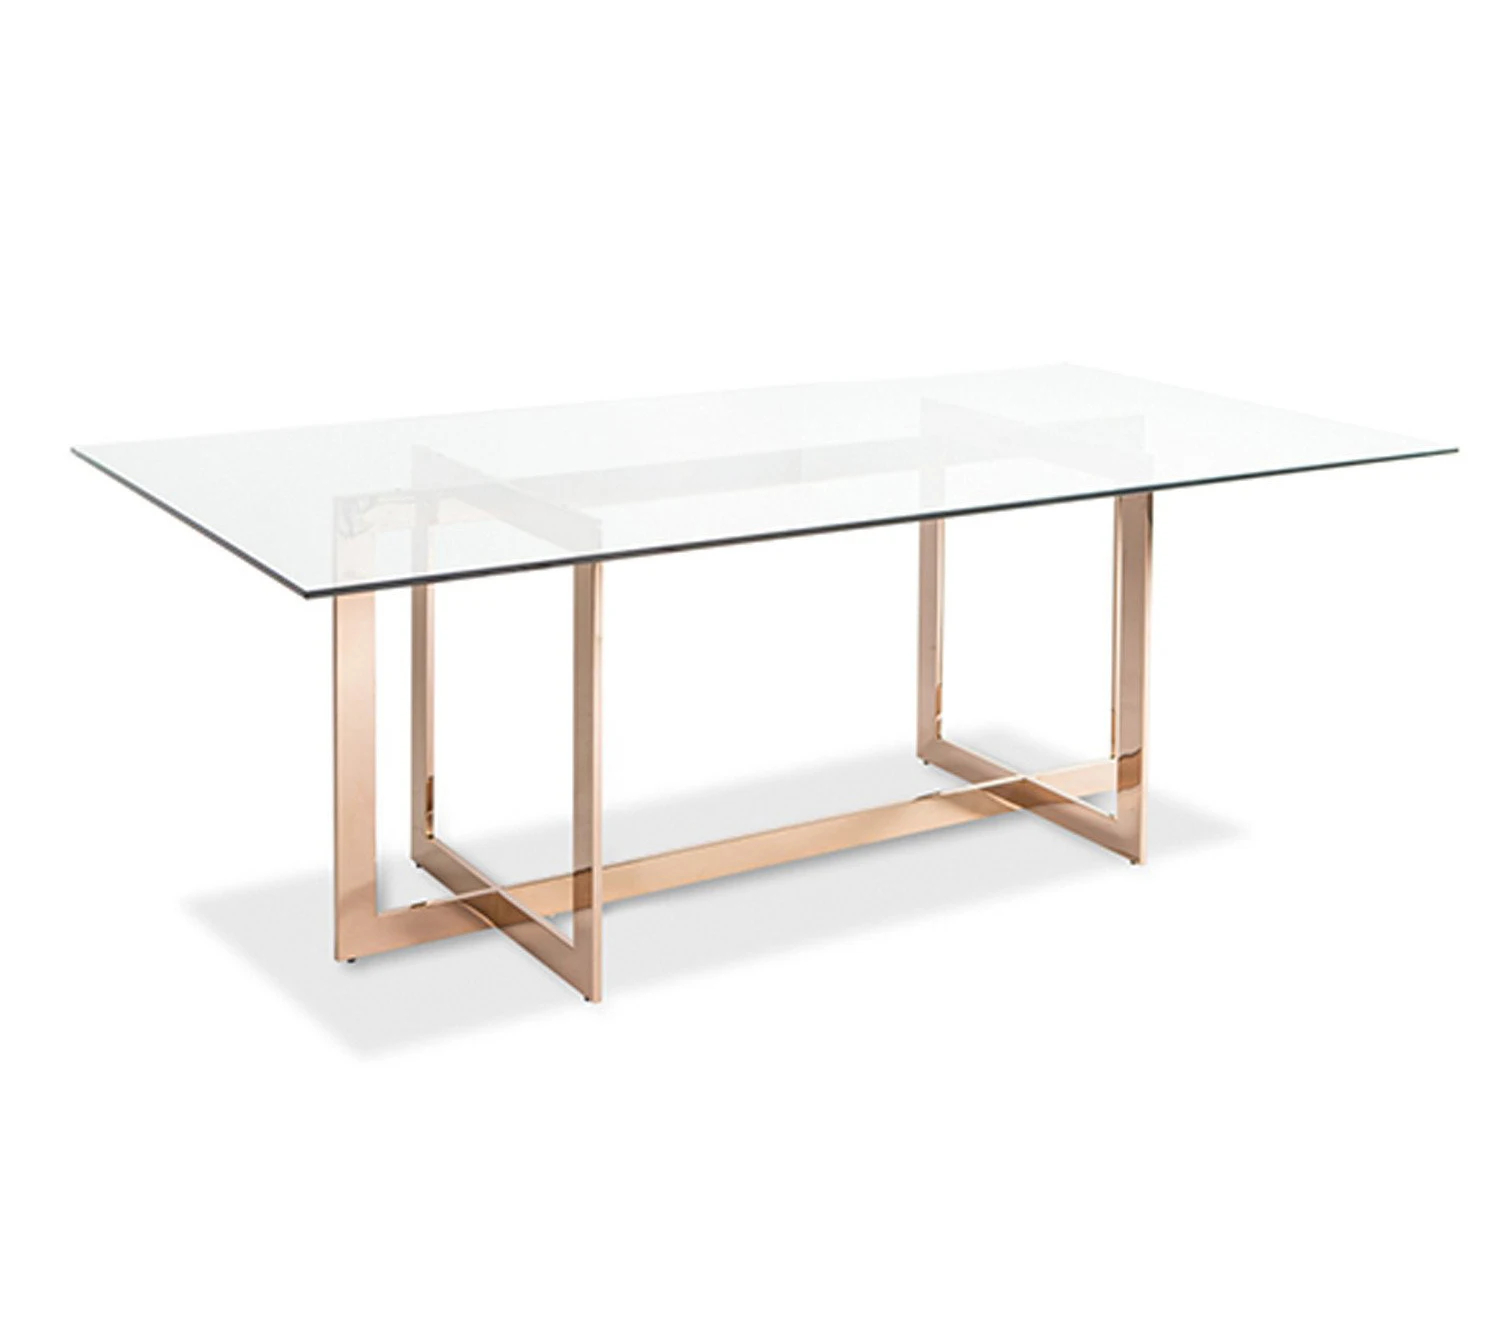 Deninsofas s.Table 700 стол стеклянный